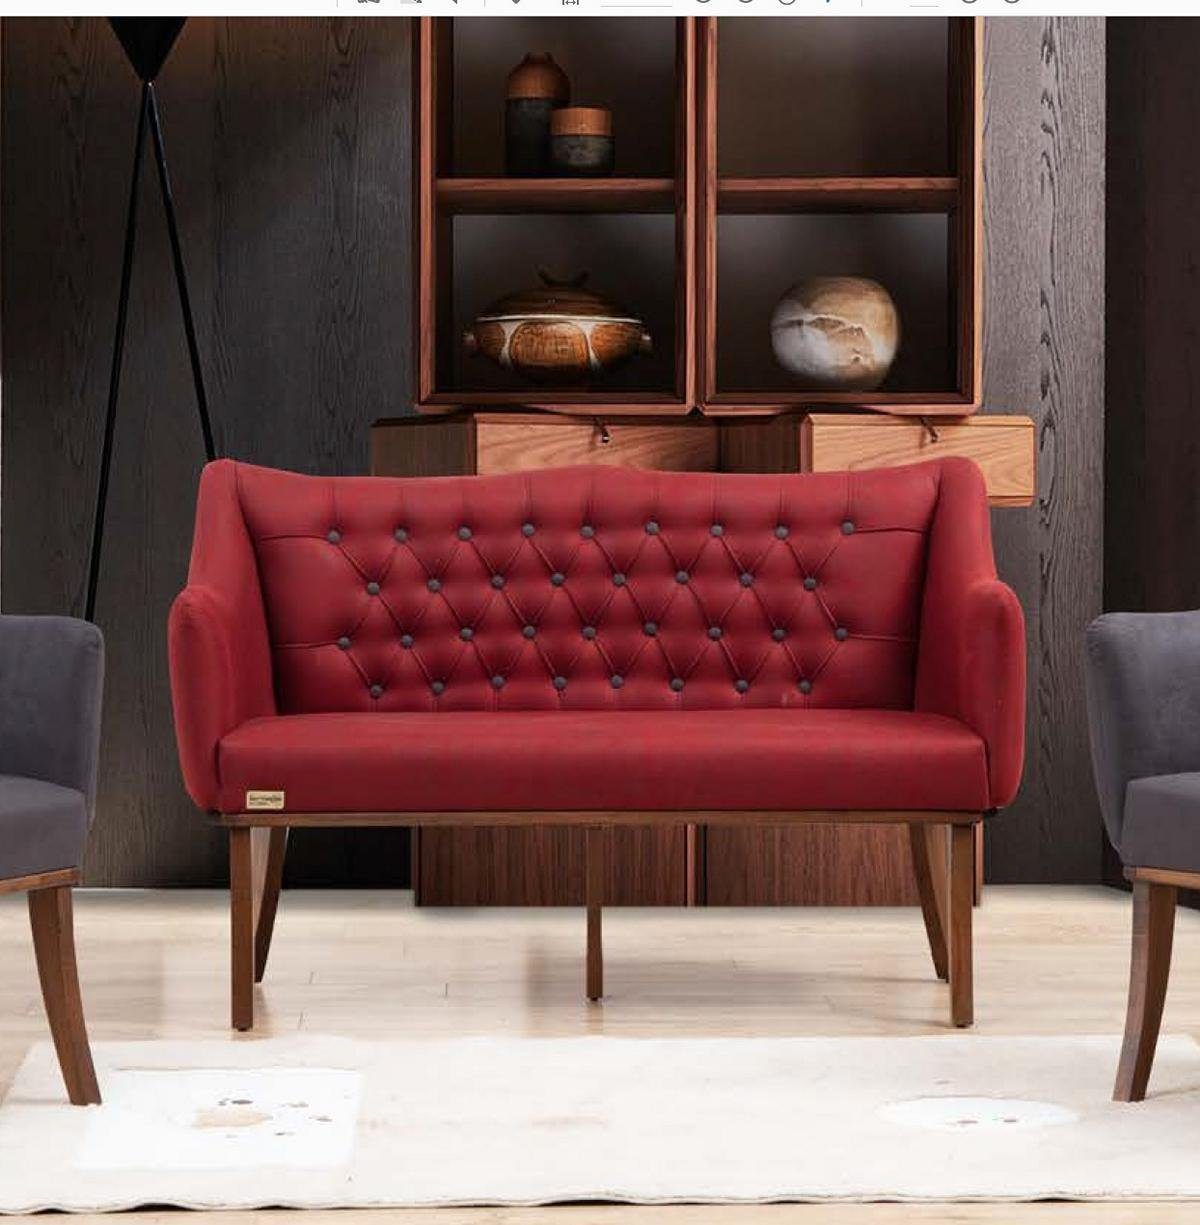 Möbel Bank Sitzbank Chesterfield Küchen Rot Zweisitzer Klassische JVmoebel Couch